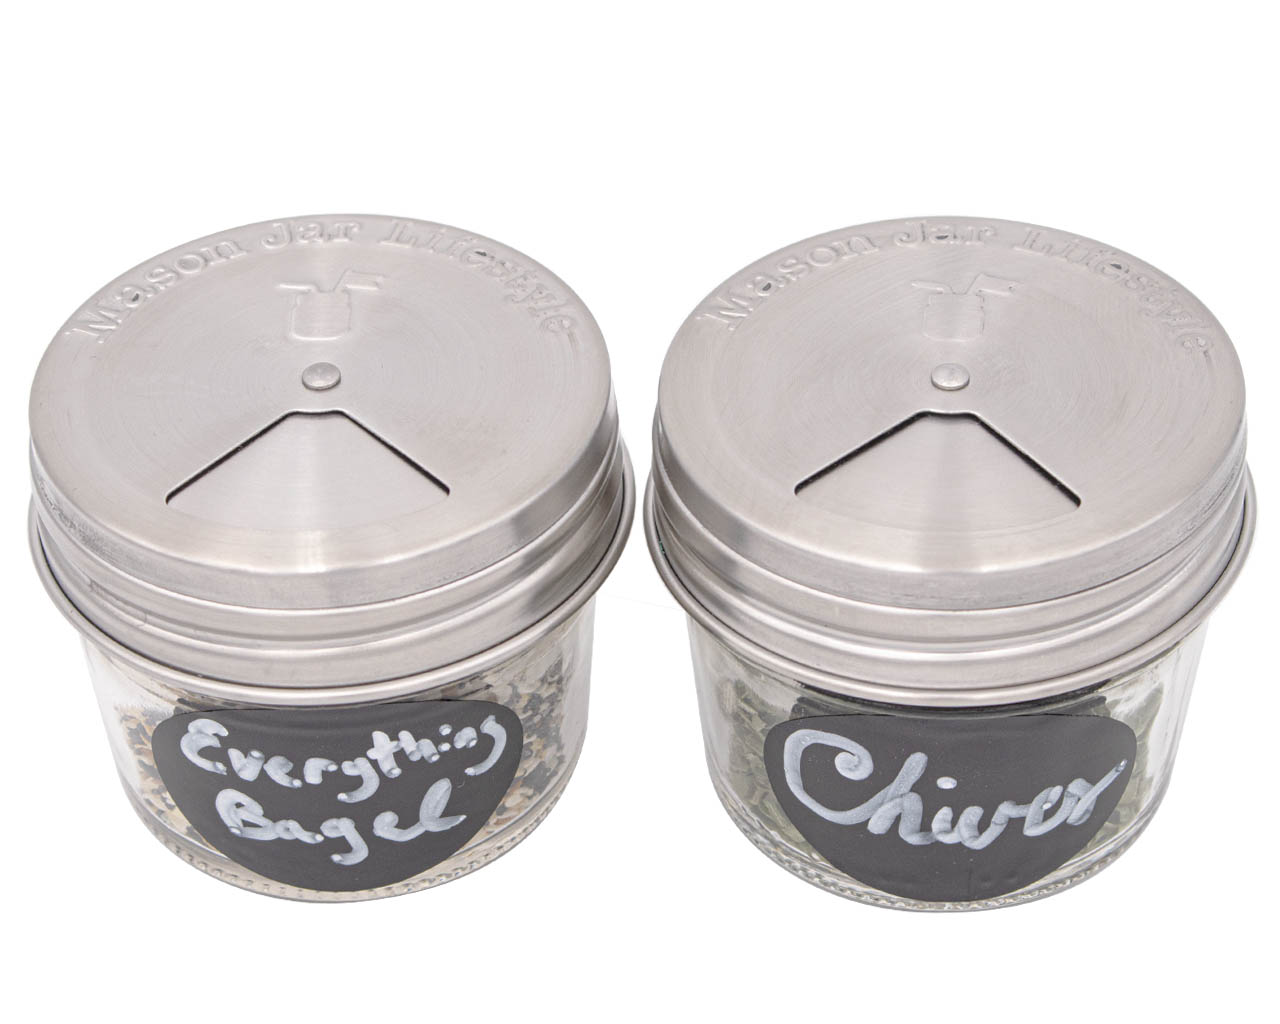 Stainless Steel Spice Shaker Lid for Regular Mouth Mason Jars